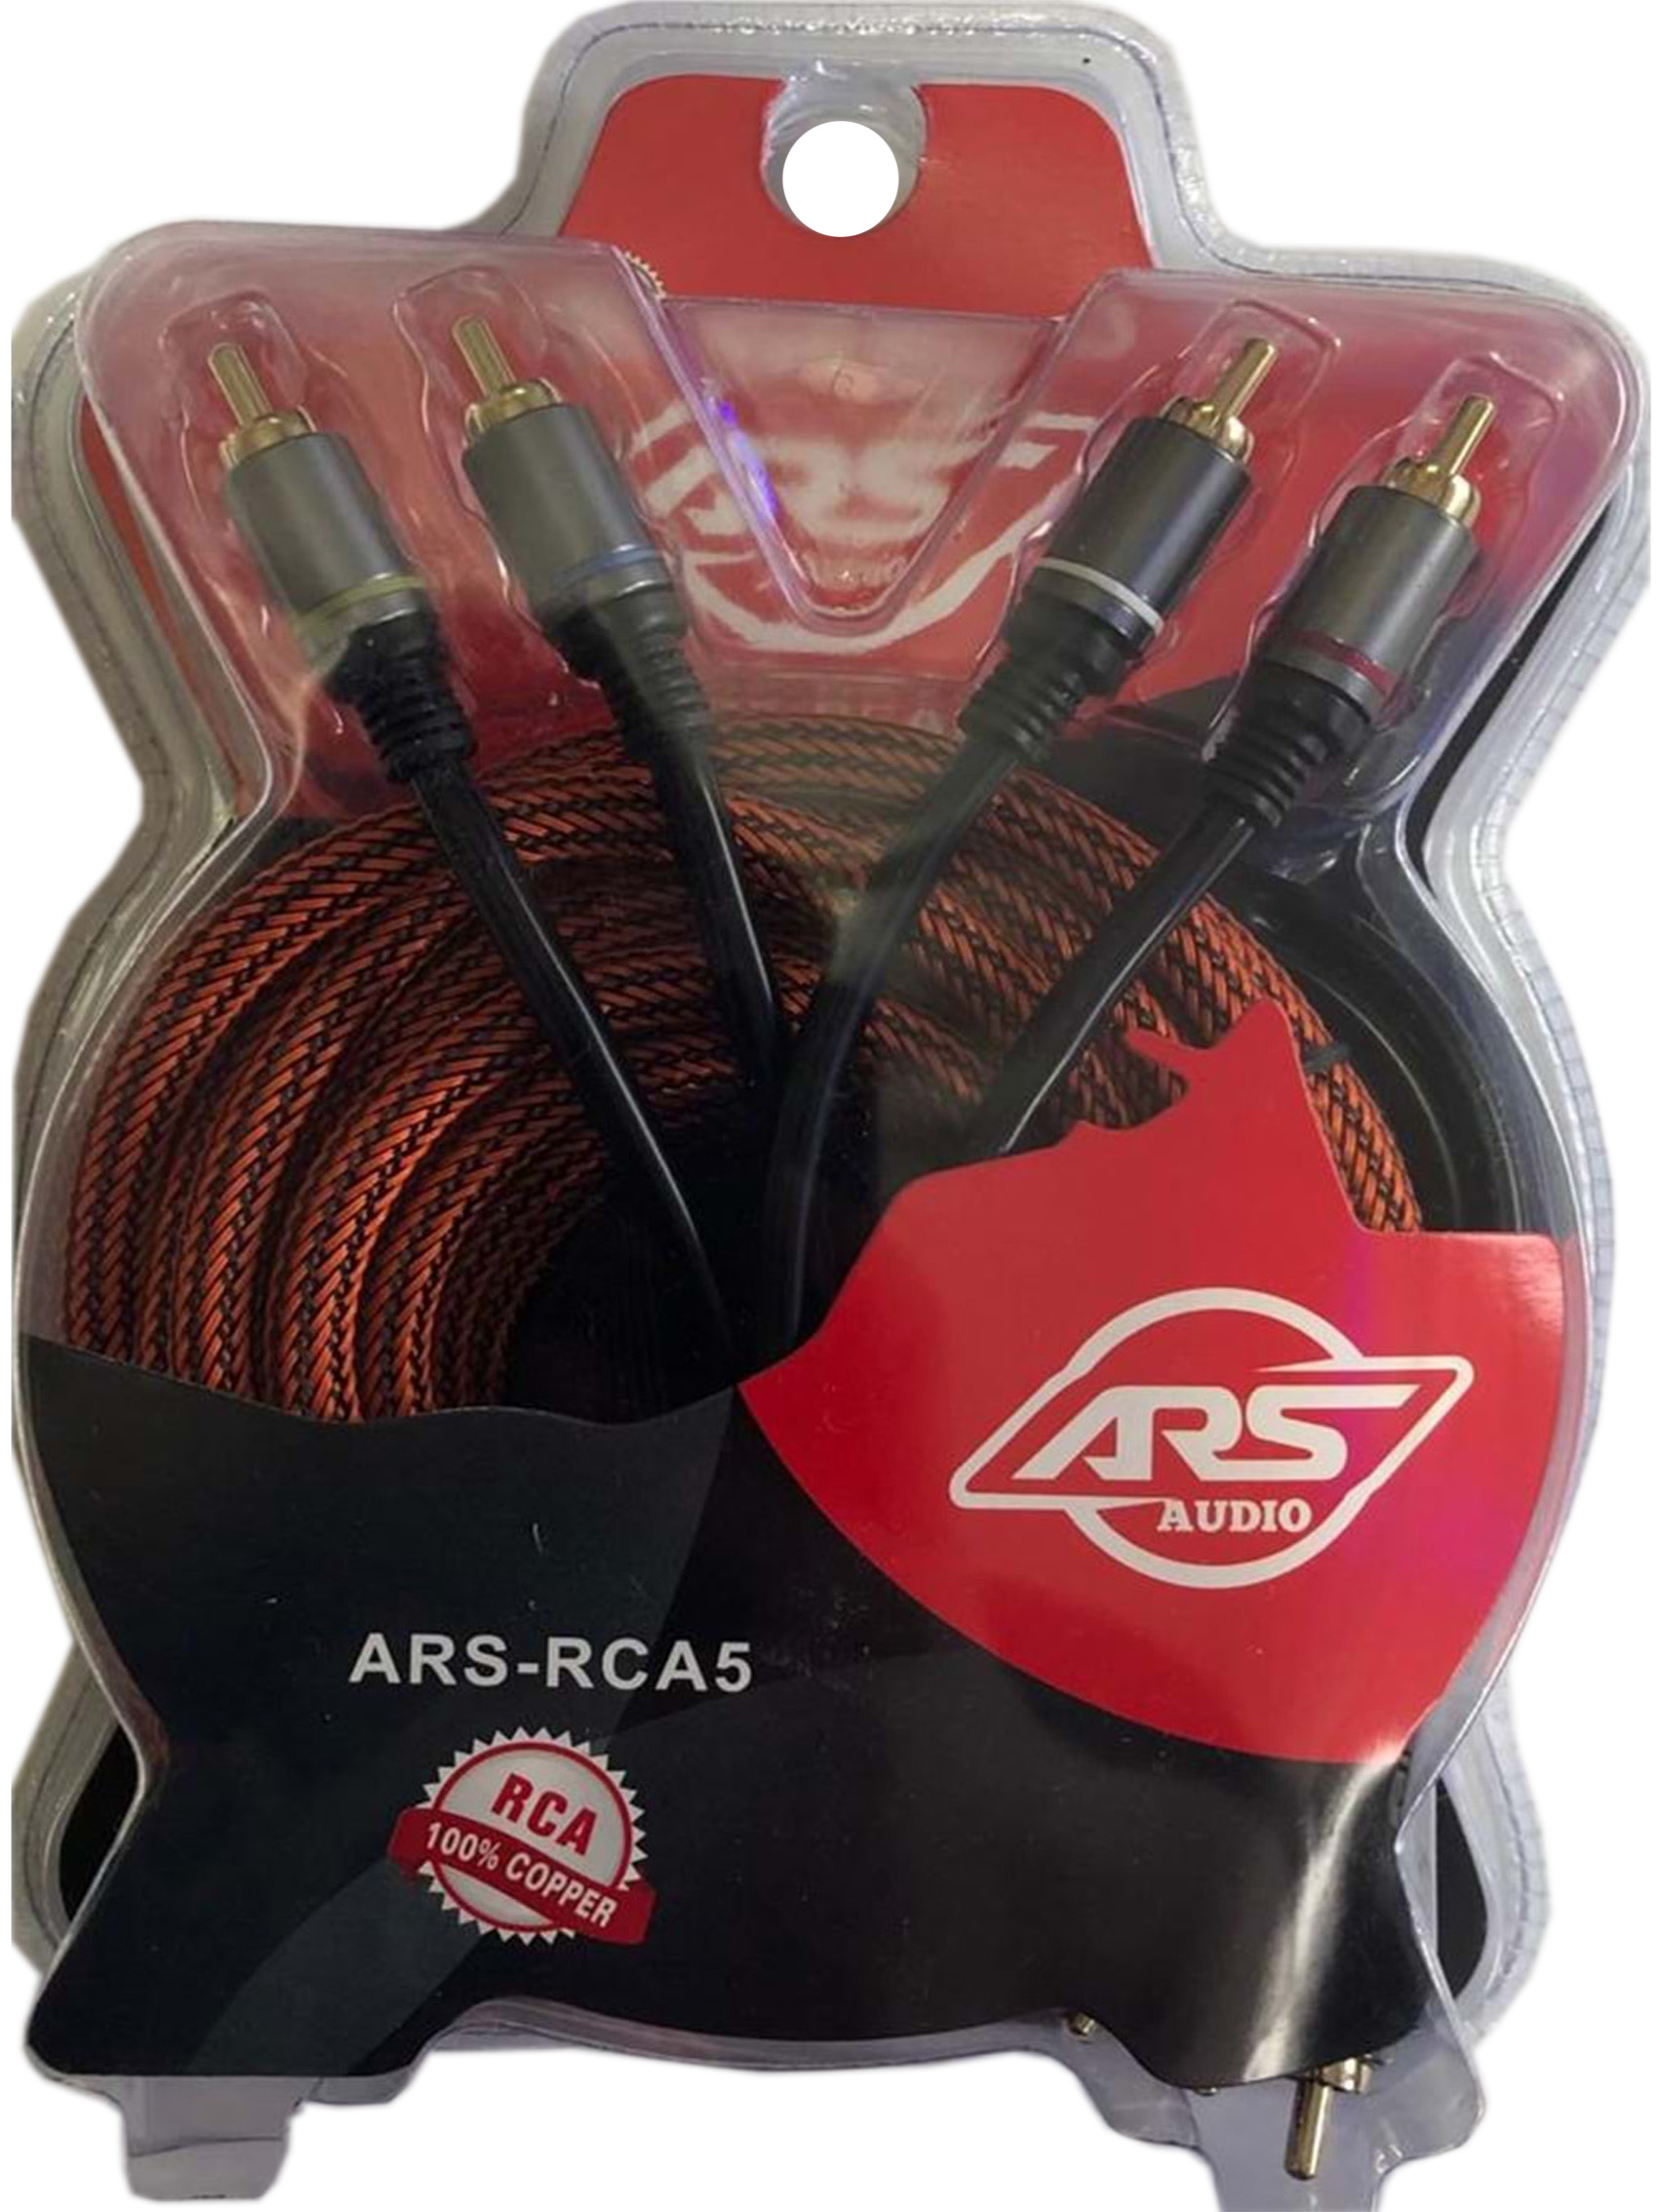 ARS-RCA5 ARS AUDİO BAKIR RCA KABLO 5MT